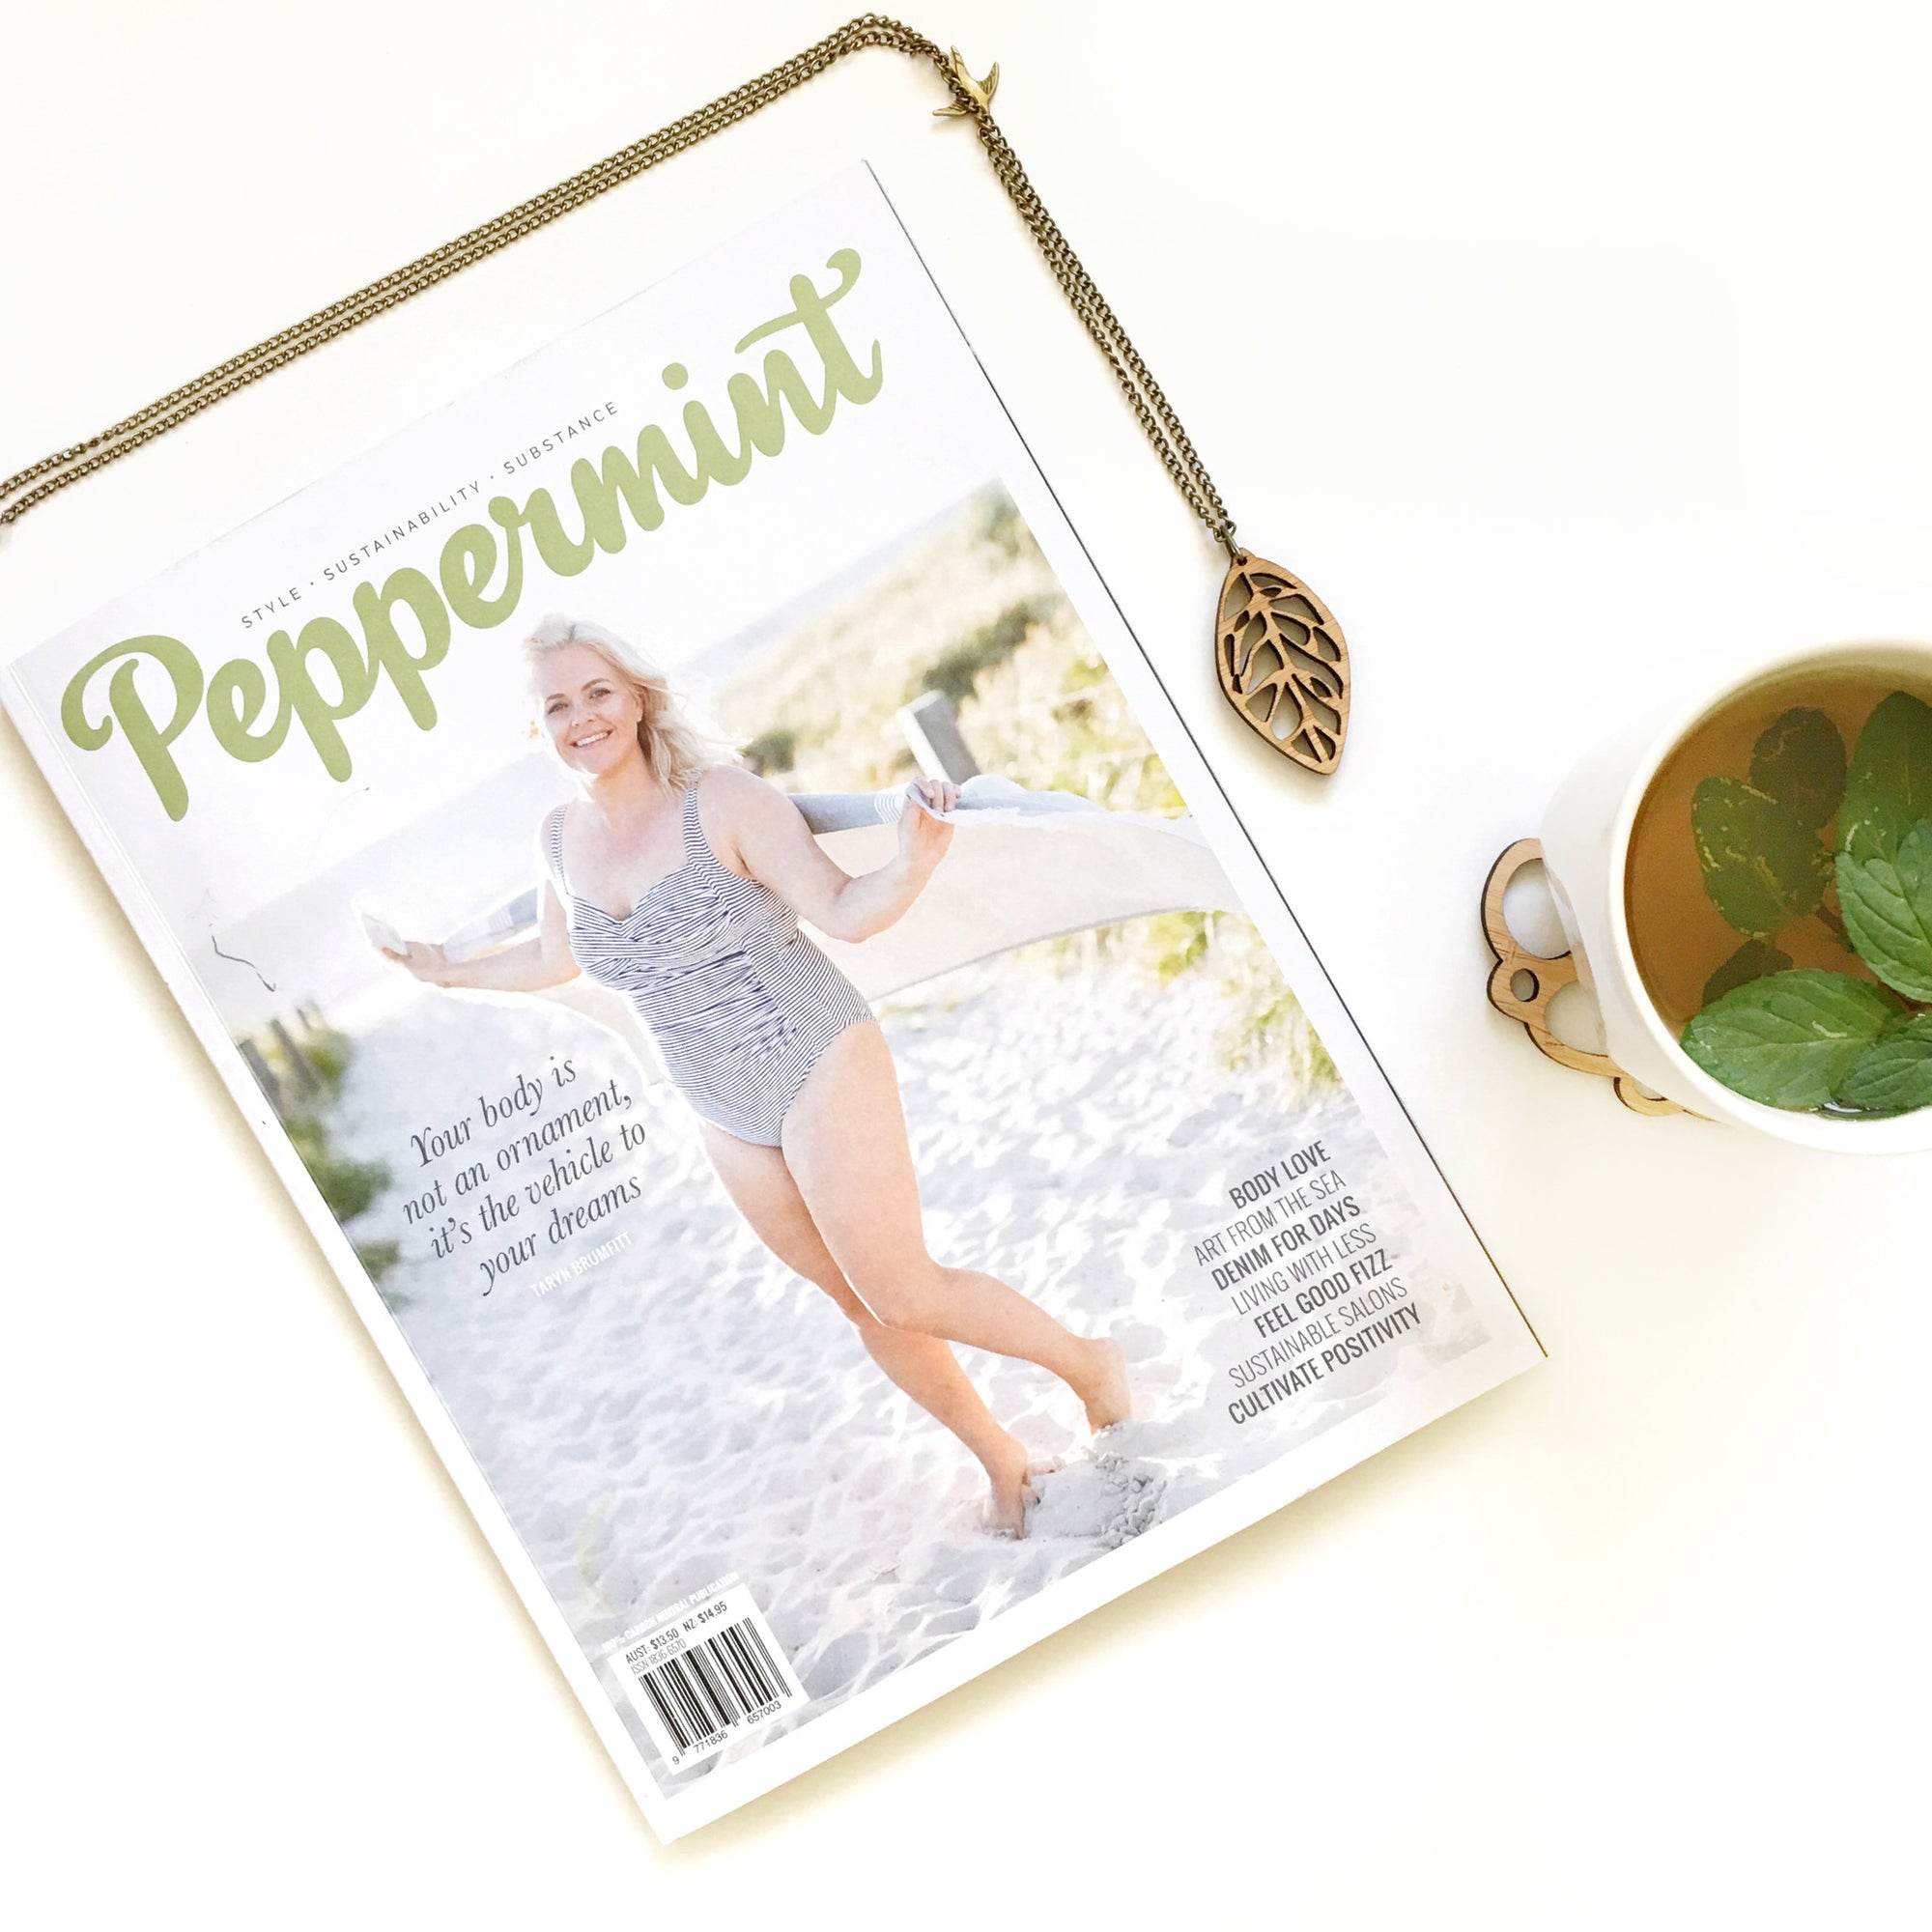 It's Peppermint (tea) time!